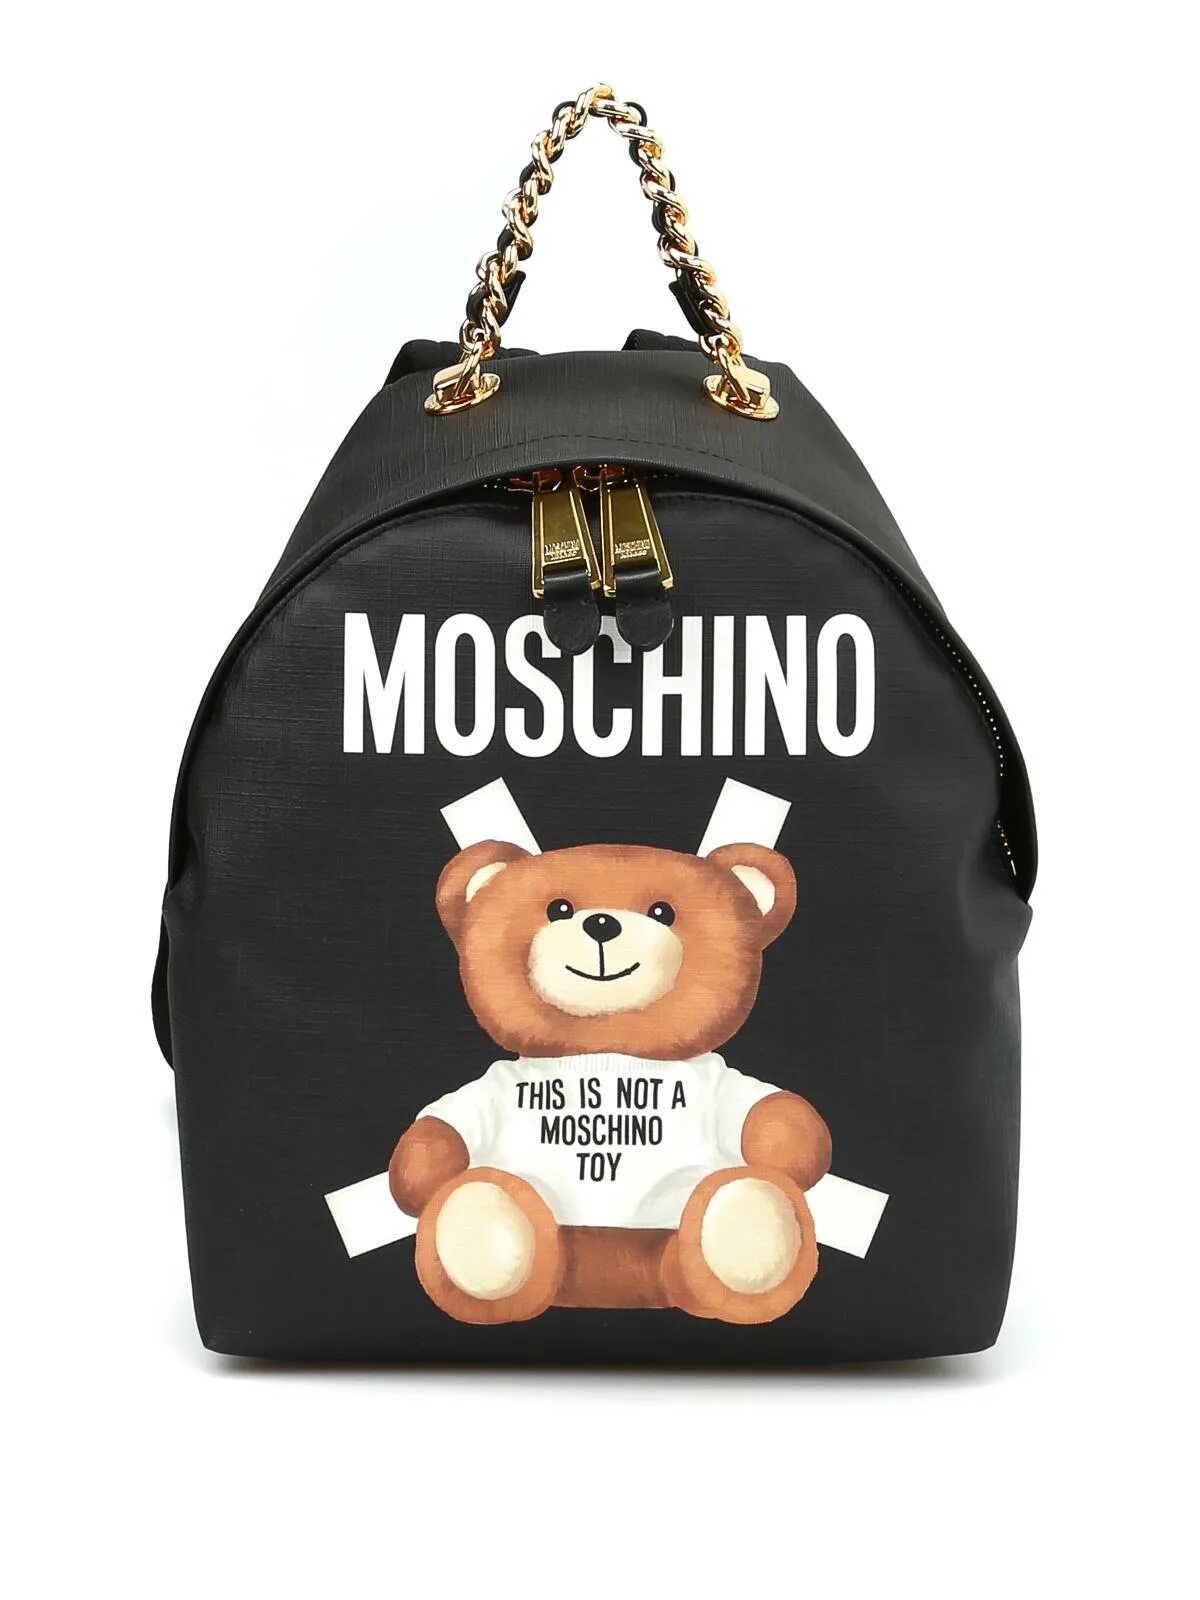 Love Moschino Backpack. Москино сумка с мишкой Moschino. Рюкзак Moschino женский. Рюкзак Москино женский кожаный. Москино мишка оригинал